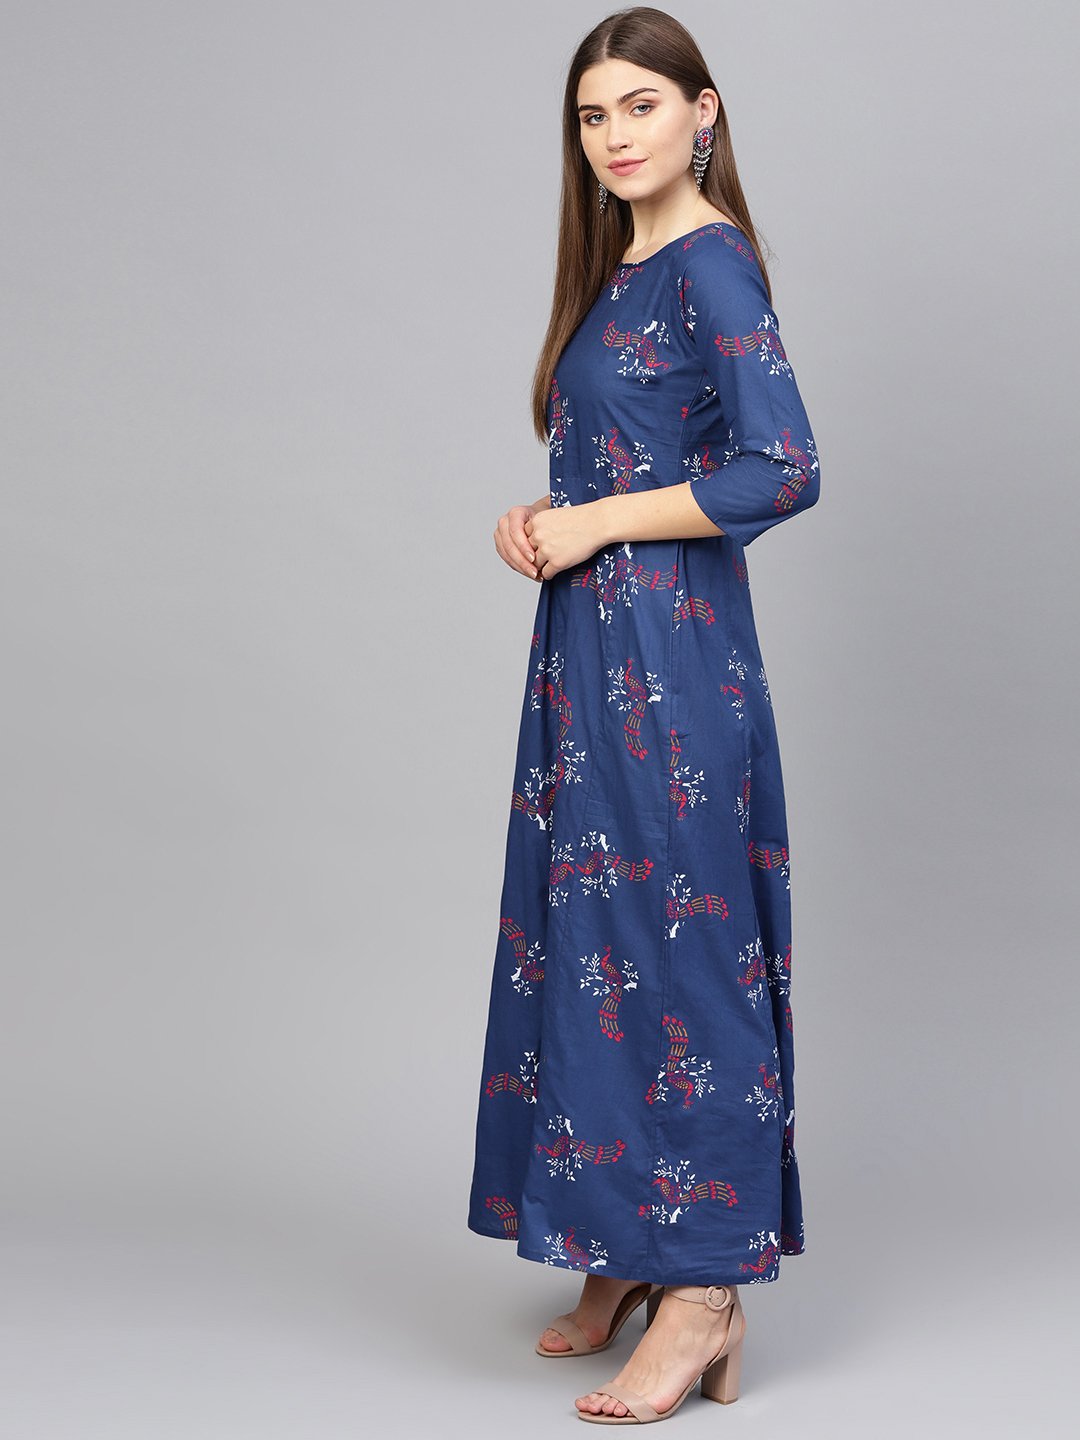 Women's Navy Blue & Pink Printed Maxi Dress - Nayo Clothing